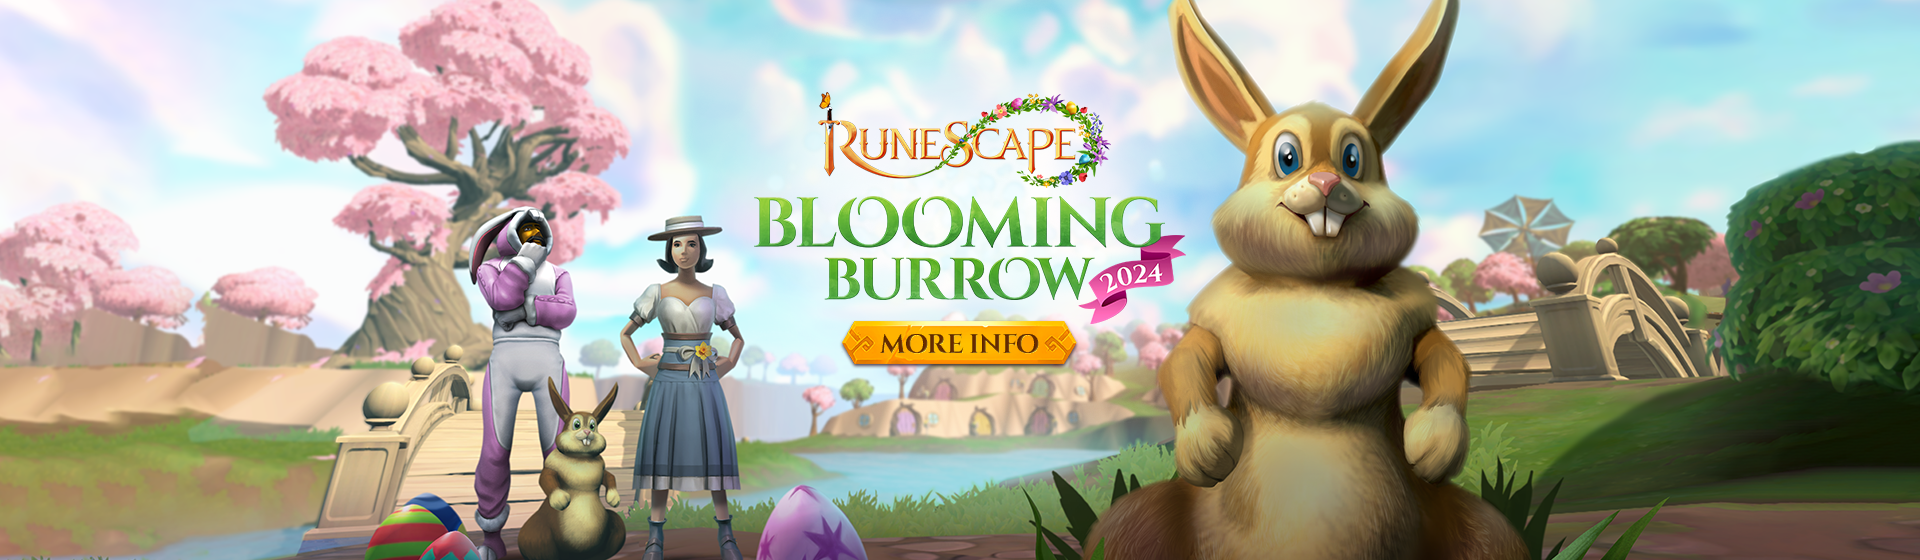 RuneScape - Blooming Burrow